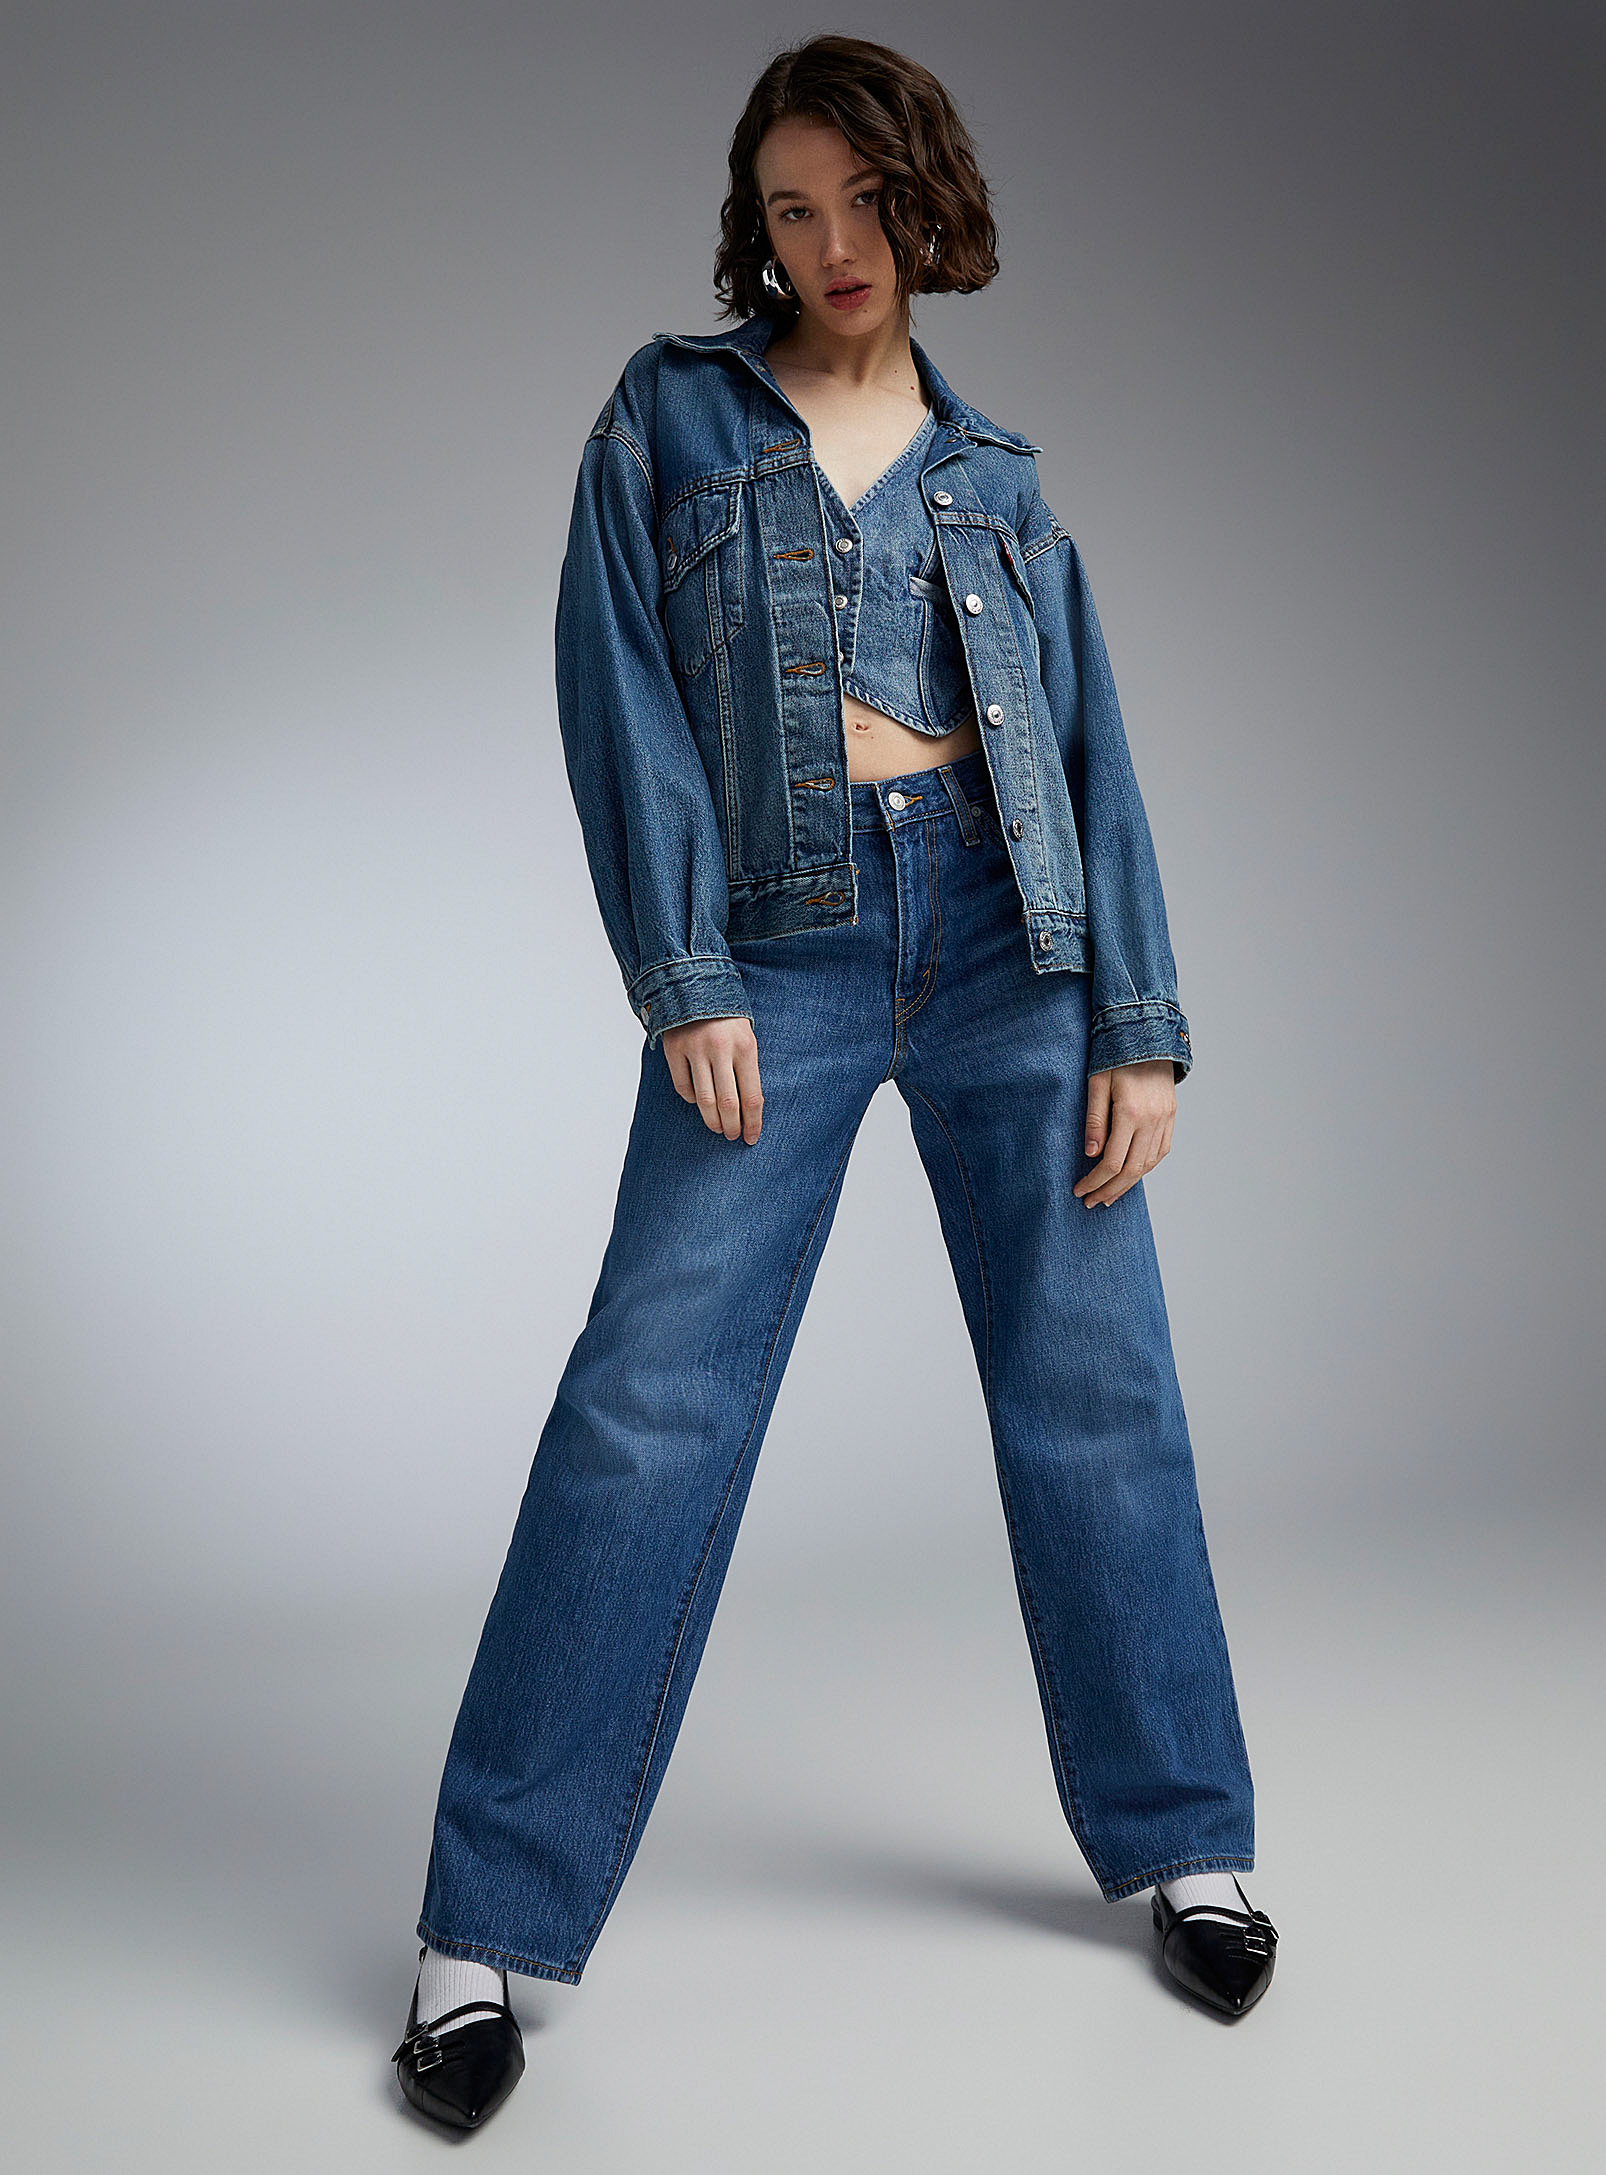 Levi's - Women's Trucker indigo blue jean jacket